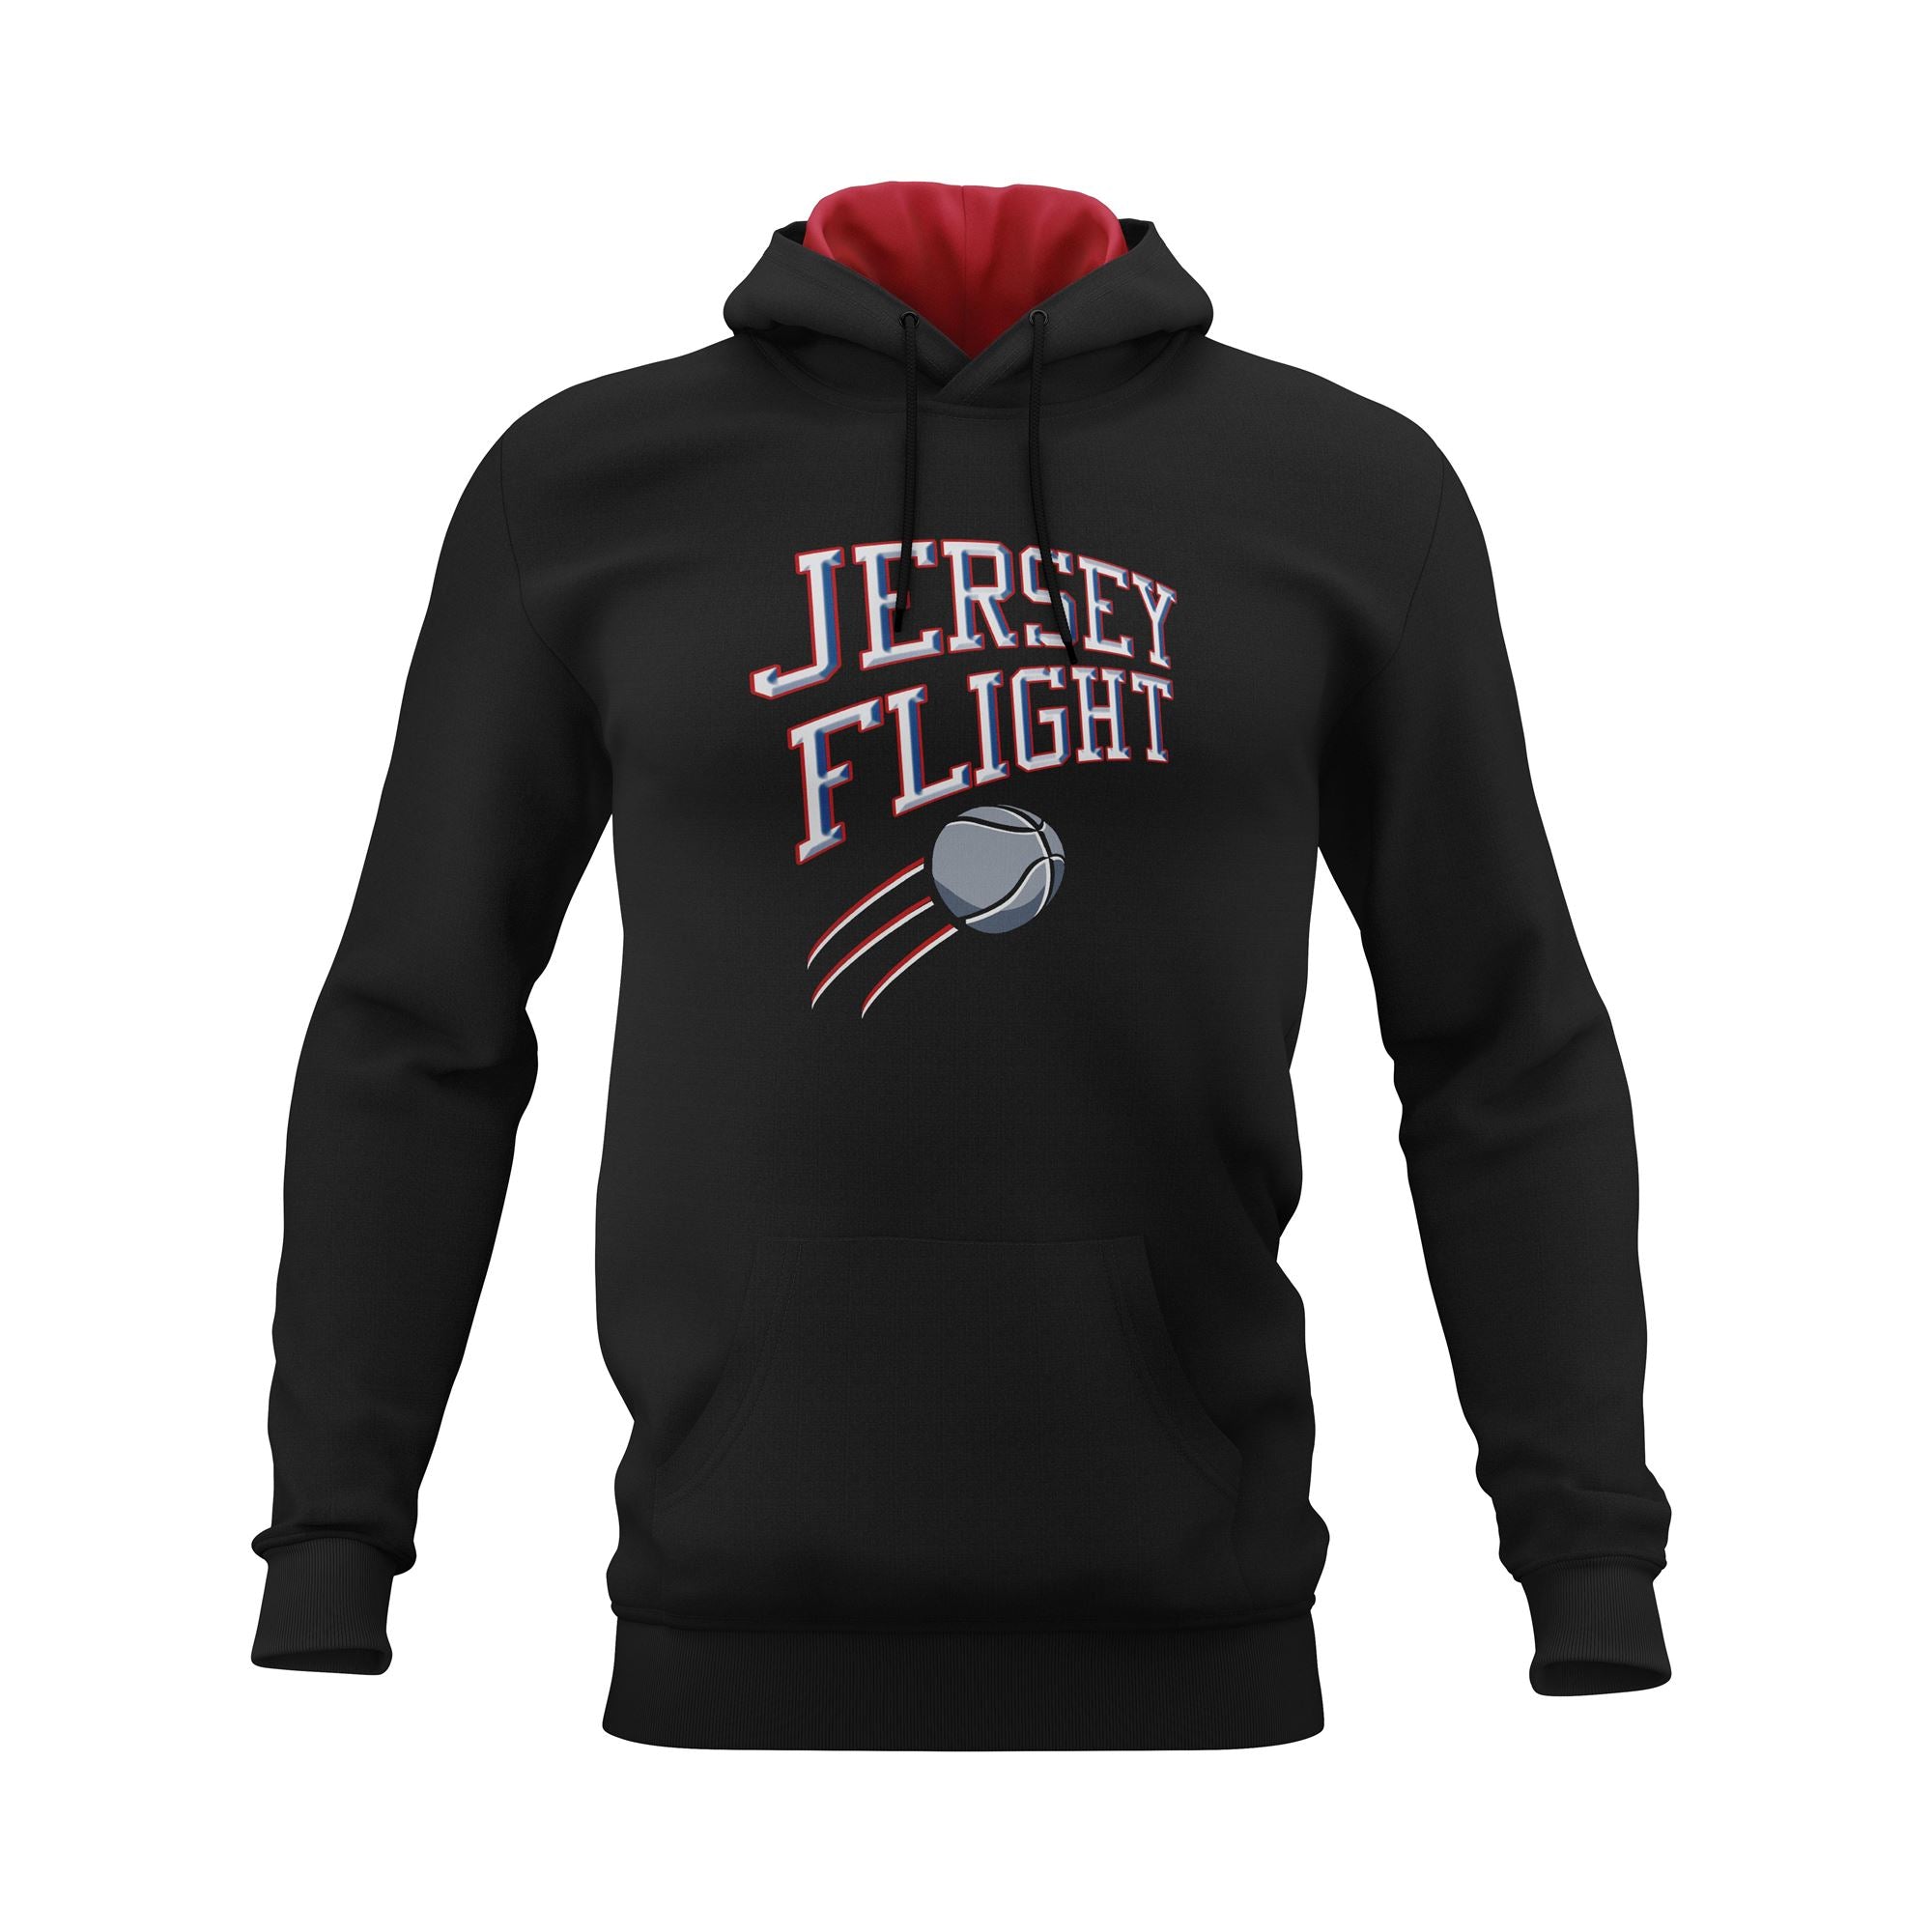 Jersey Flight Pullover Hoodie - Mens Black